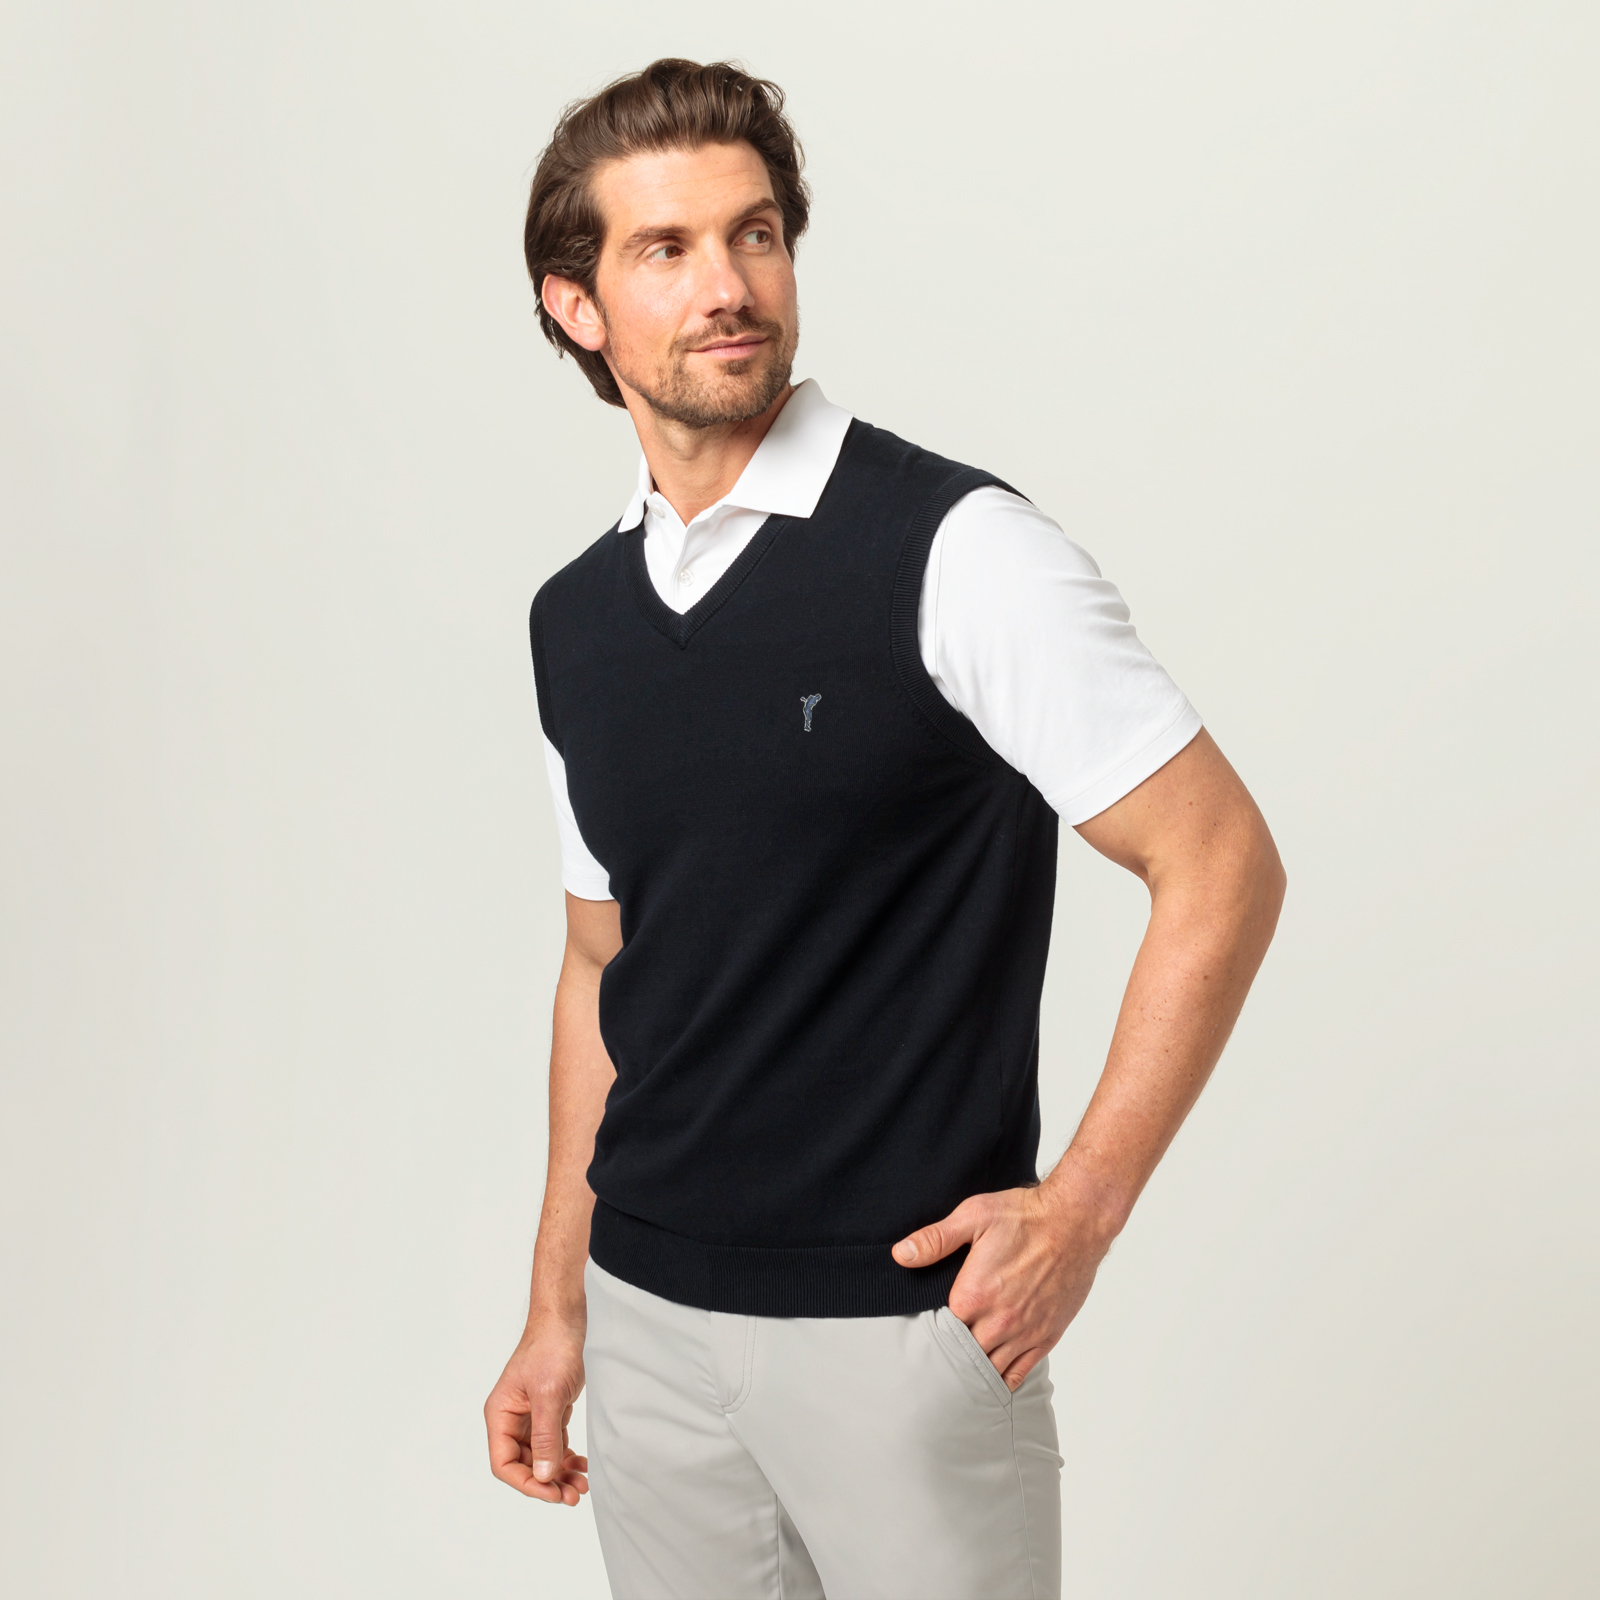 Sleeveless, soft cotton V-neck golf sweater 